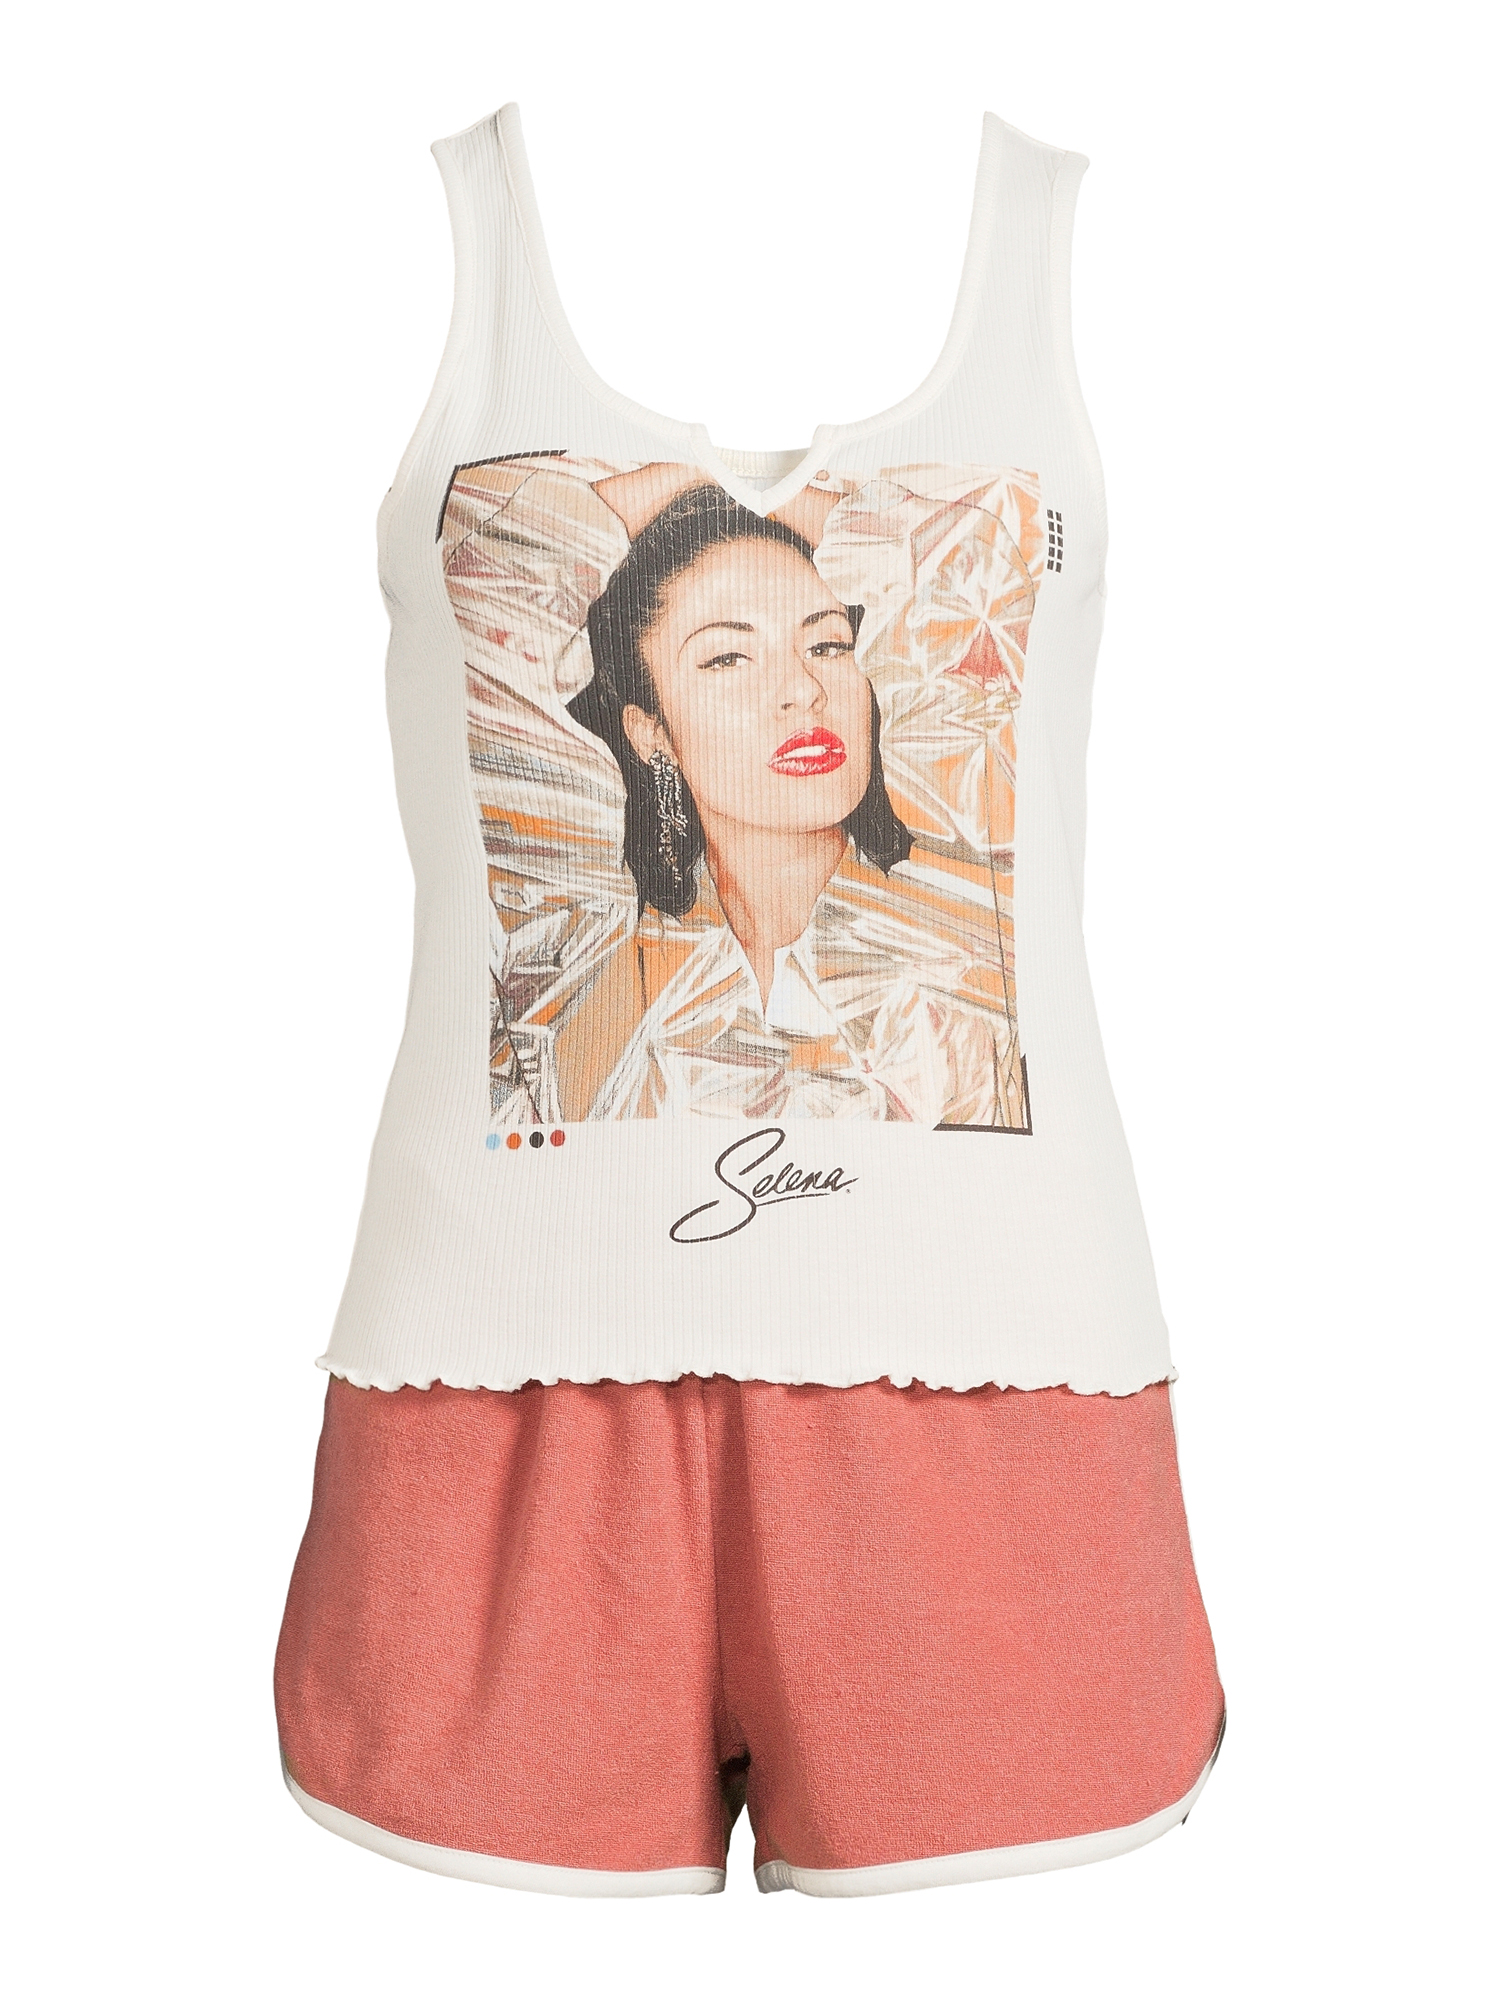 Selena Women's Ribbed Tank Top and Shorts Sleep Set, 2-Piece - image 5 of 5